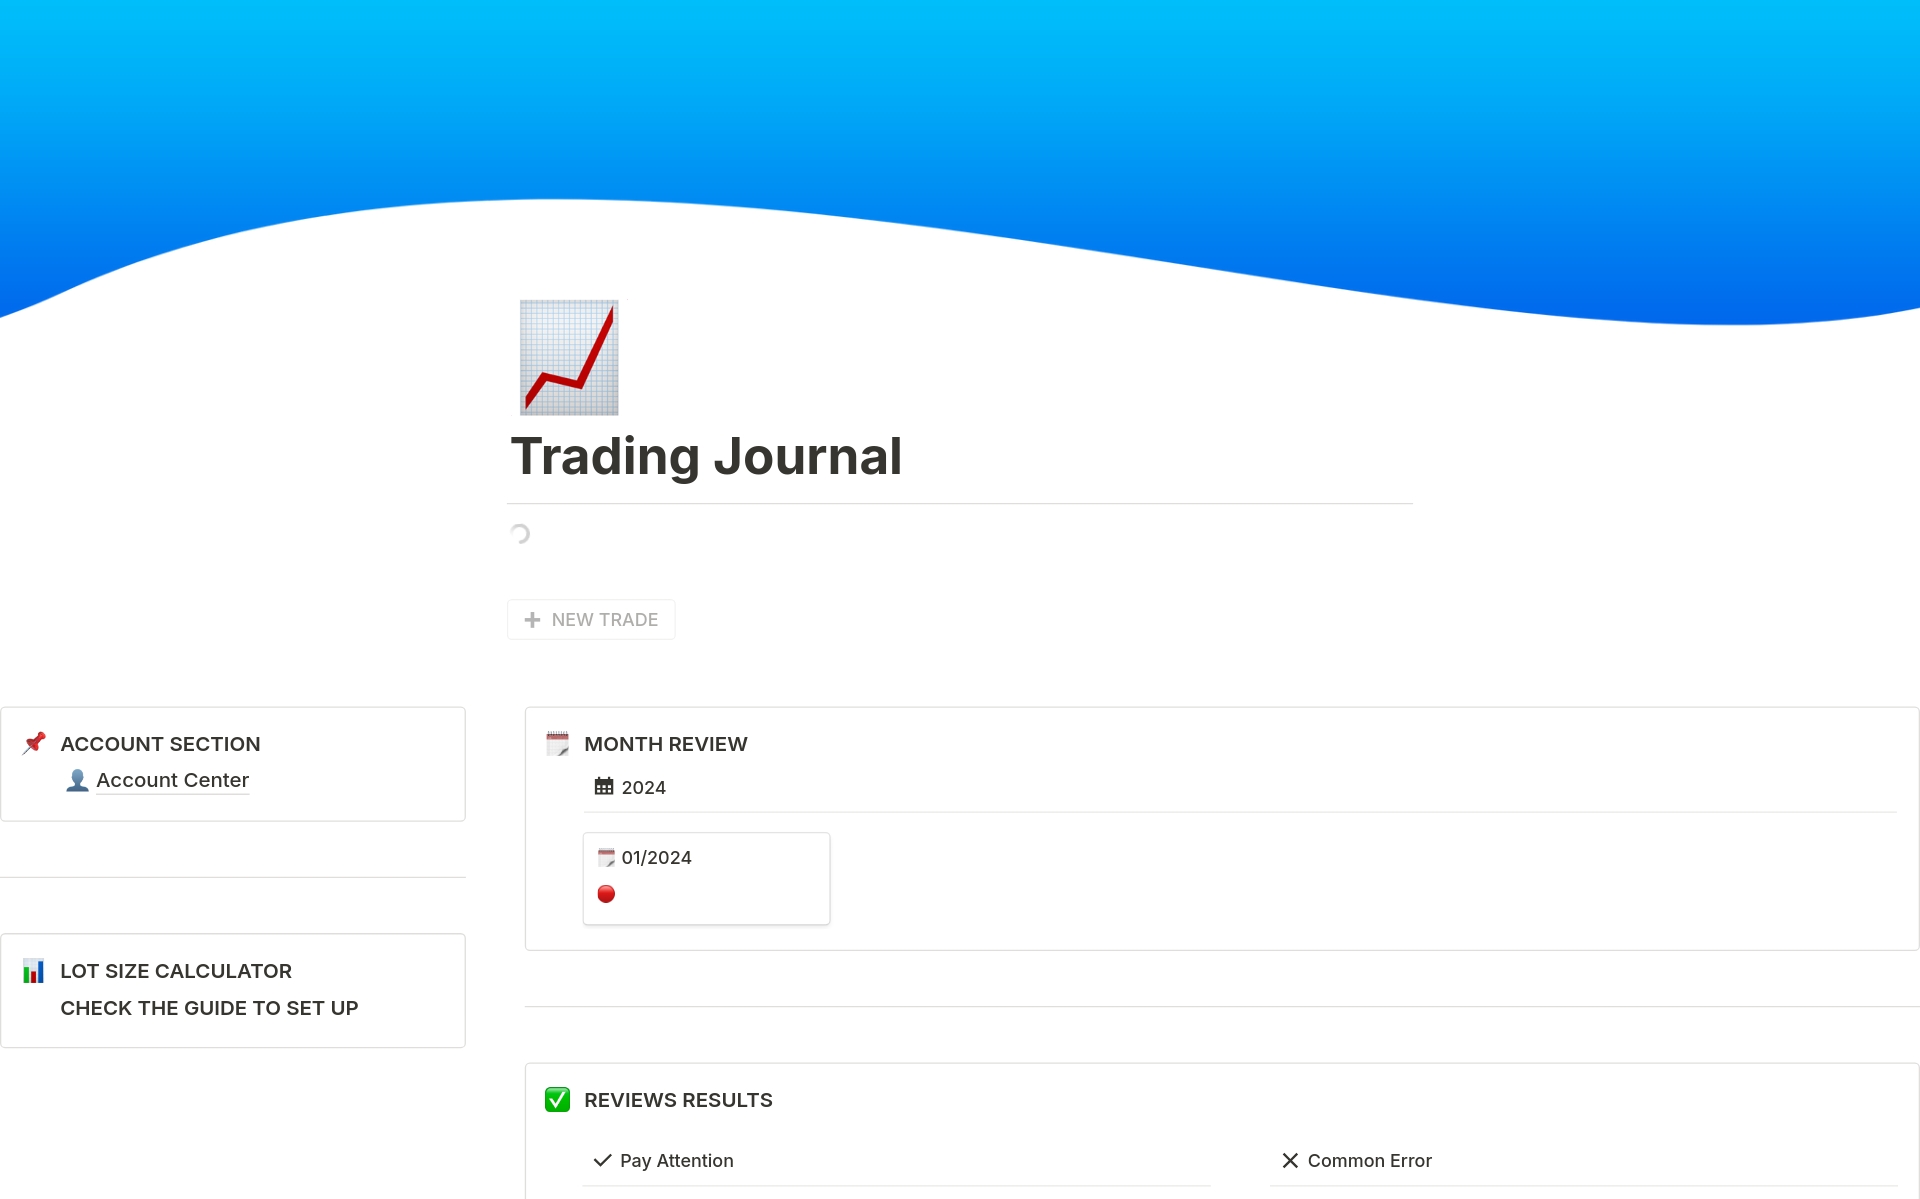 Vista previa de plantilla para Complete Trading Journal